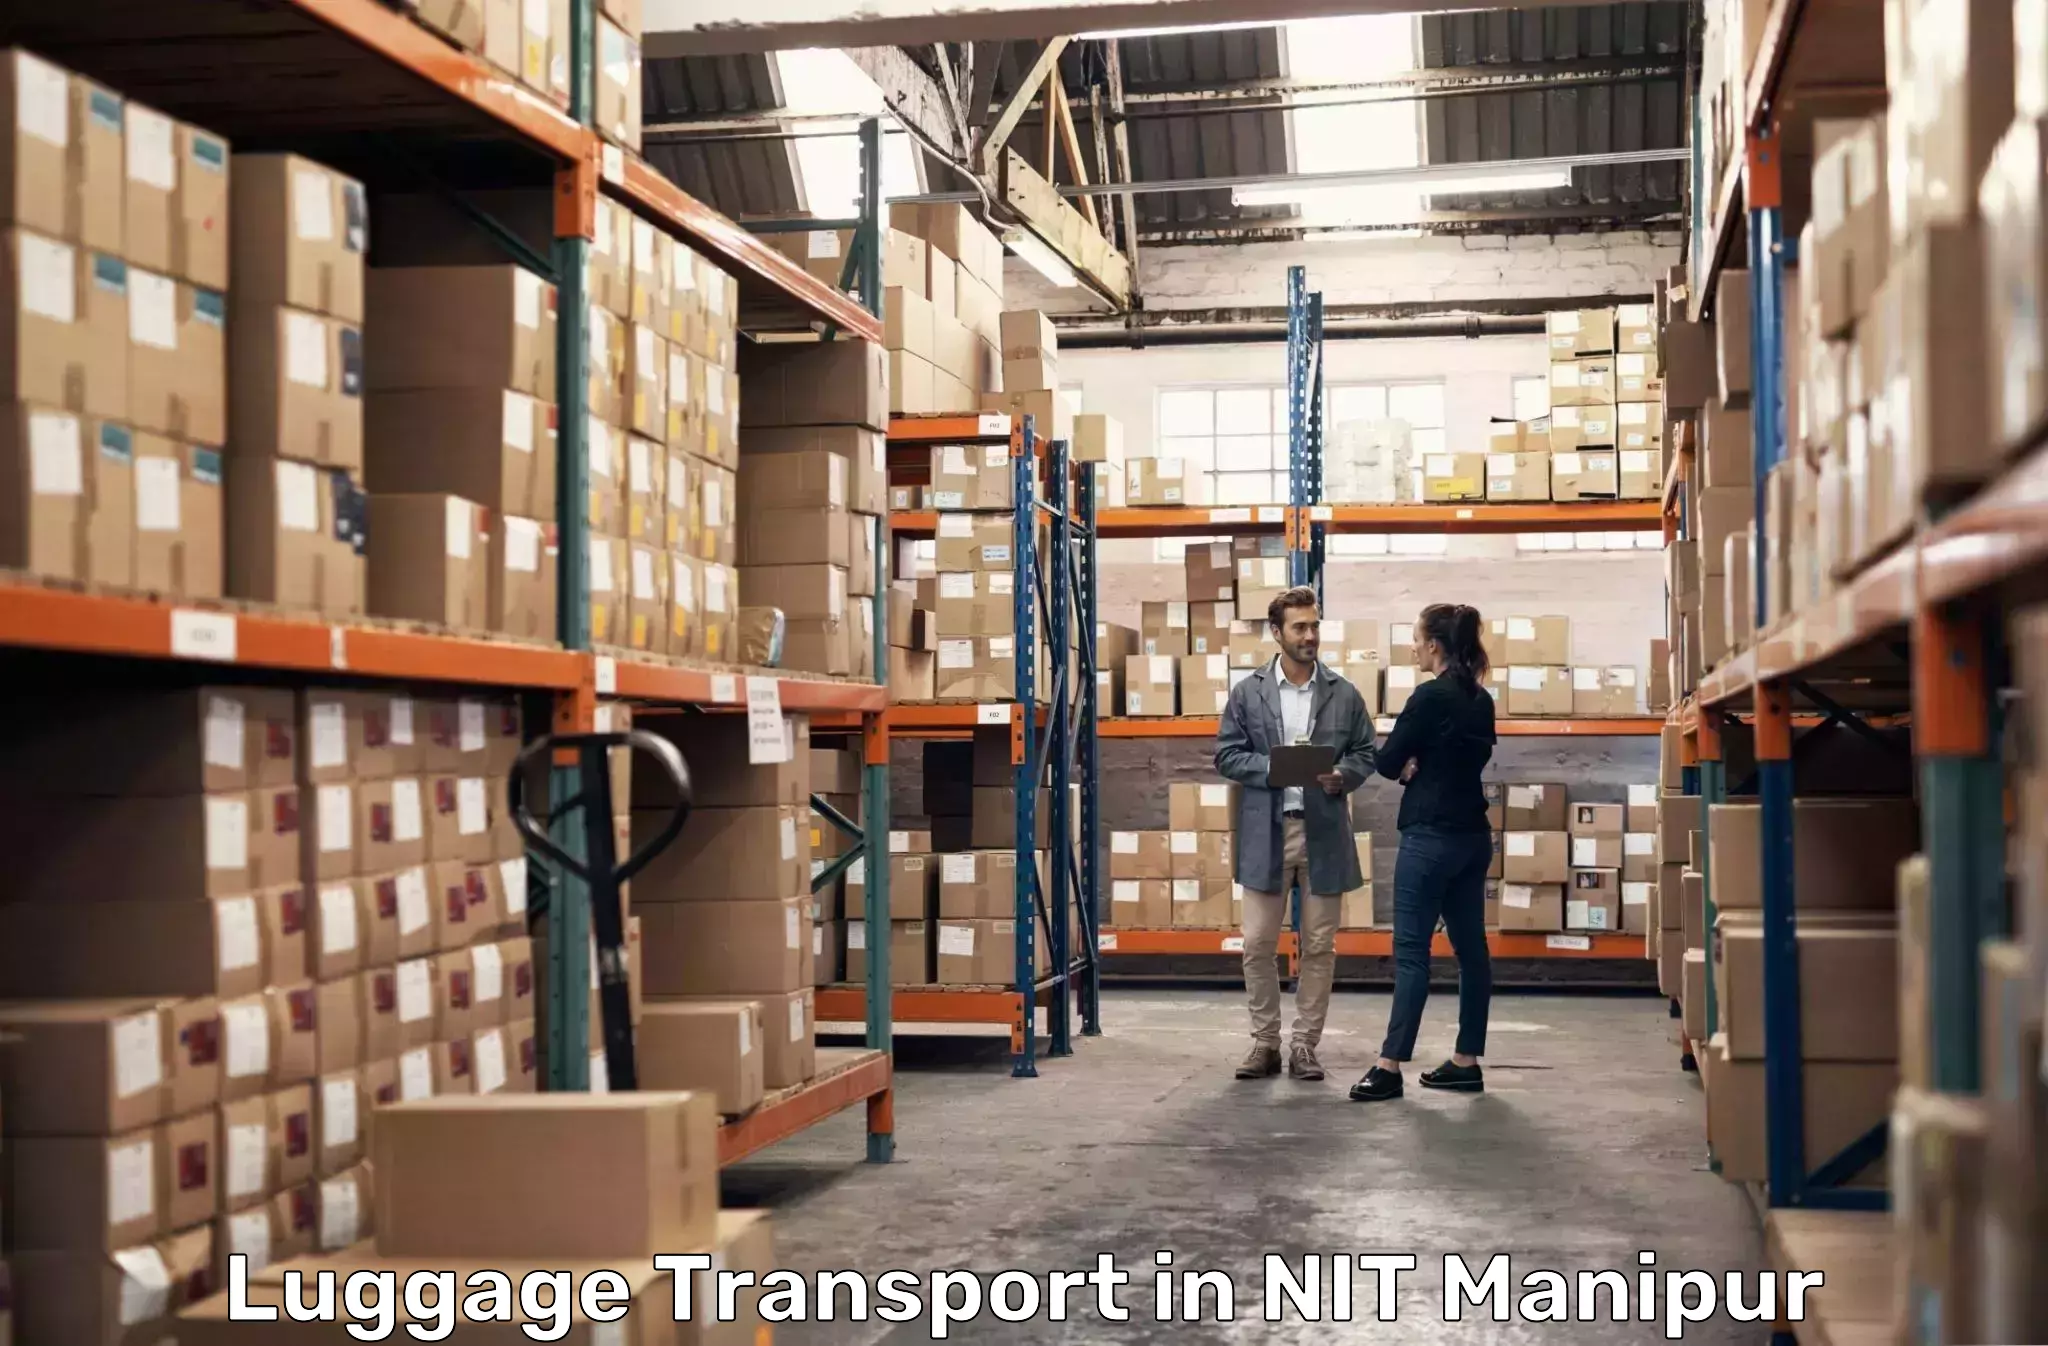 Multi-destination luggage transport in NIT Manipur